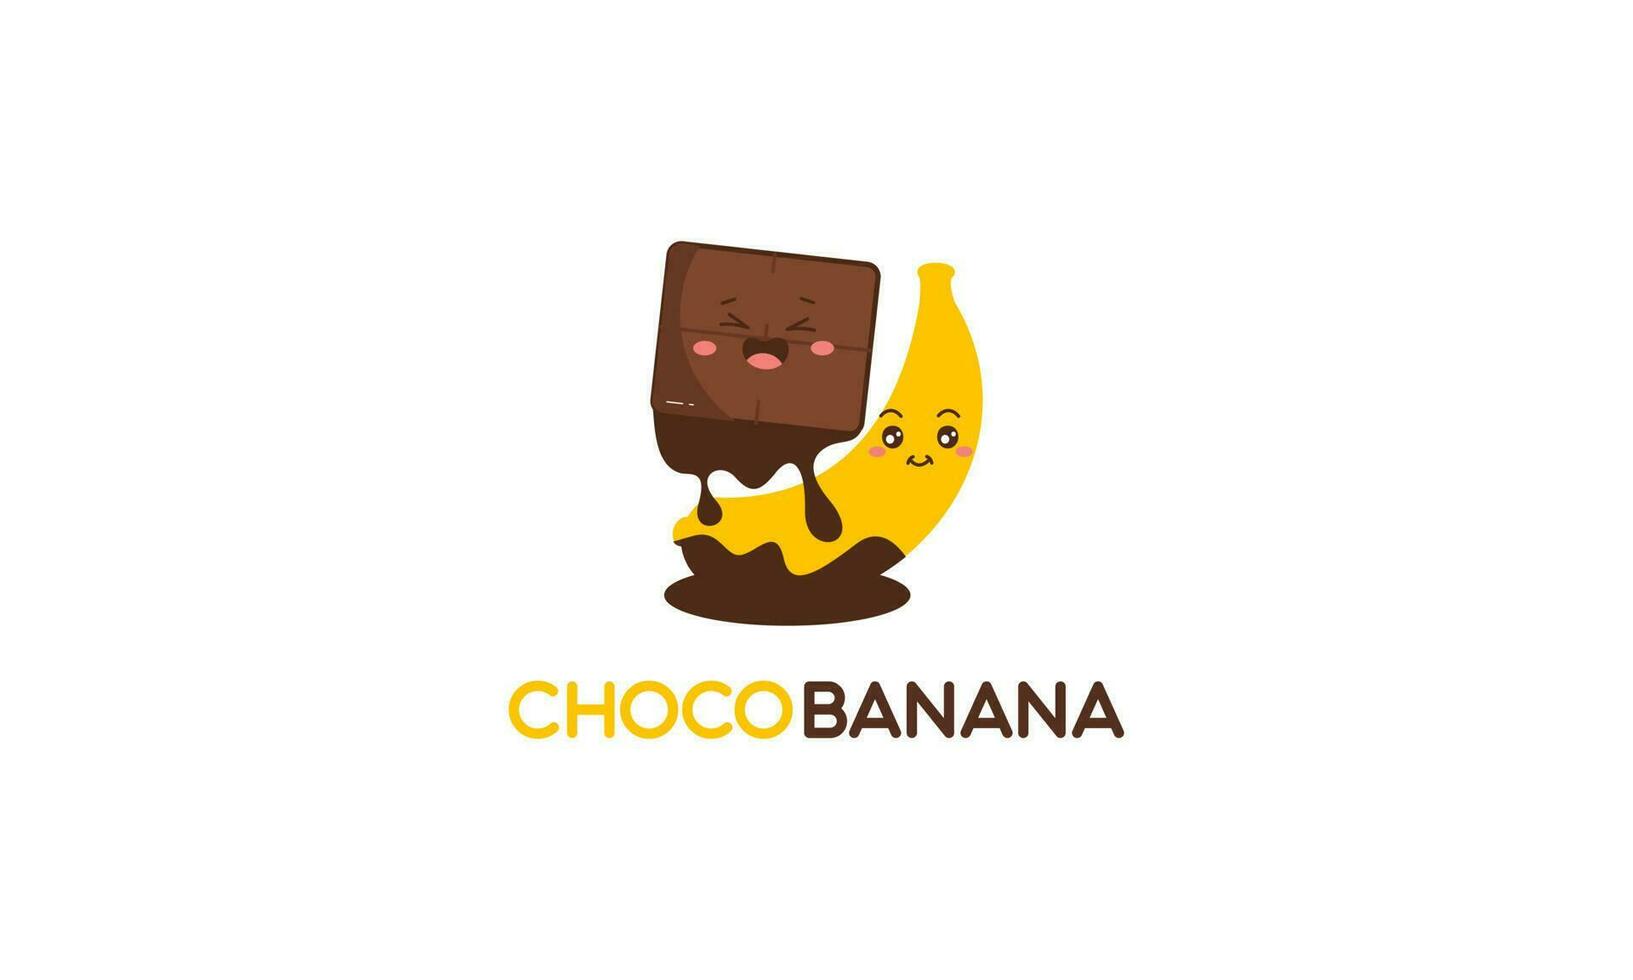 Chocolate banana logo illustration with funny character vector